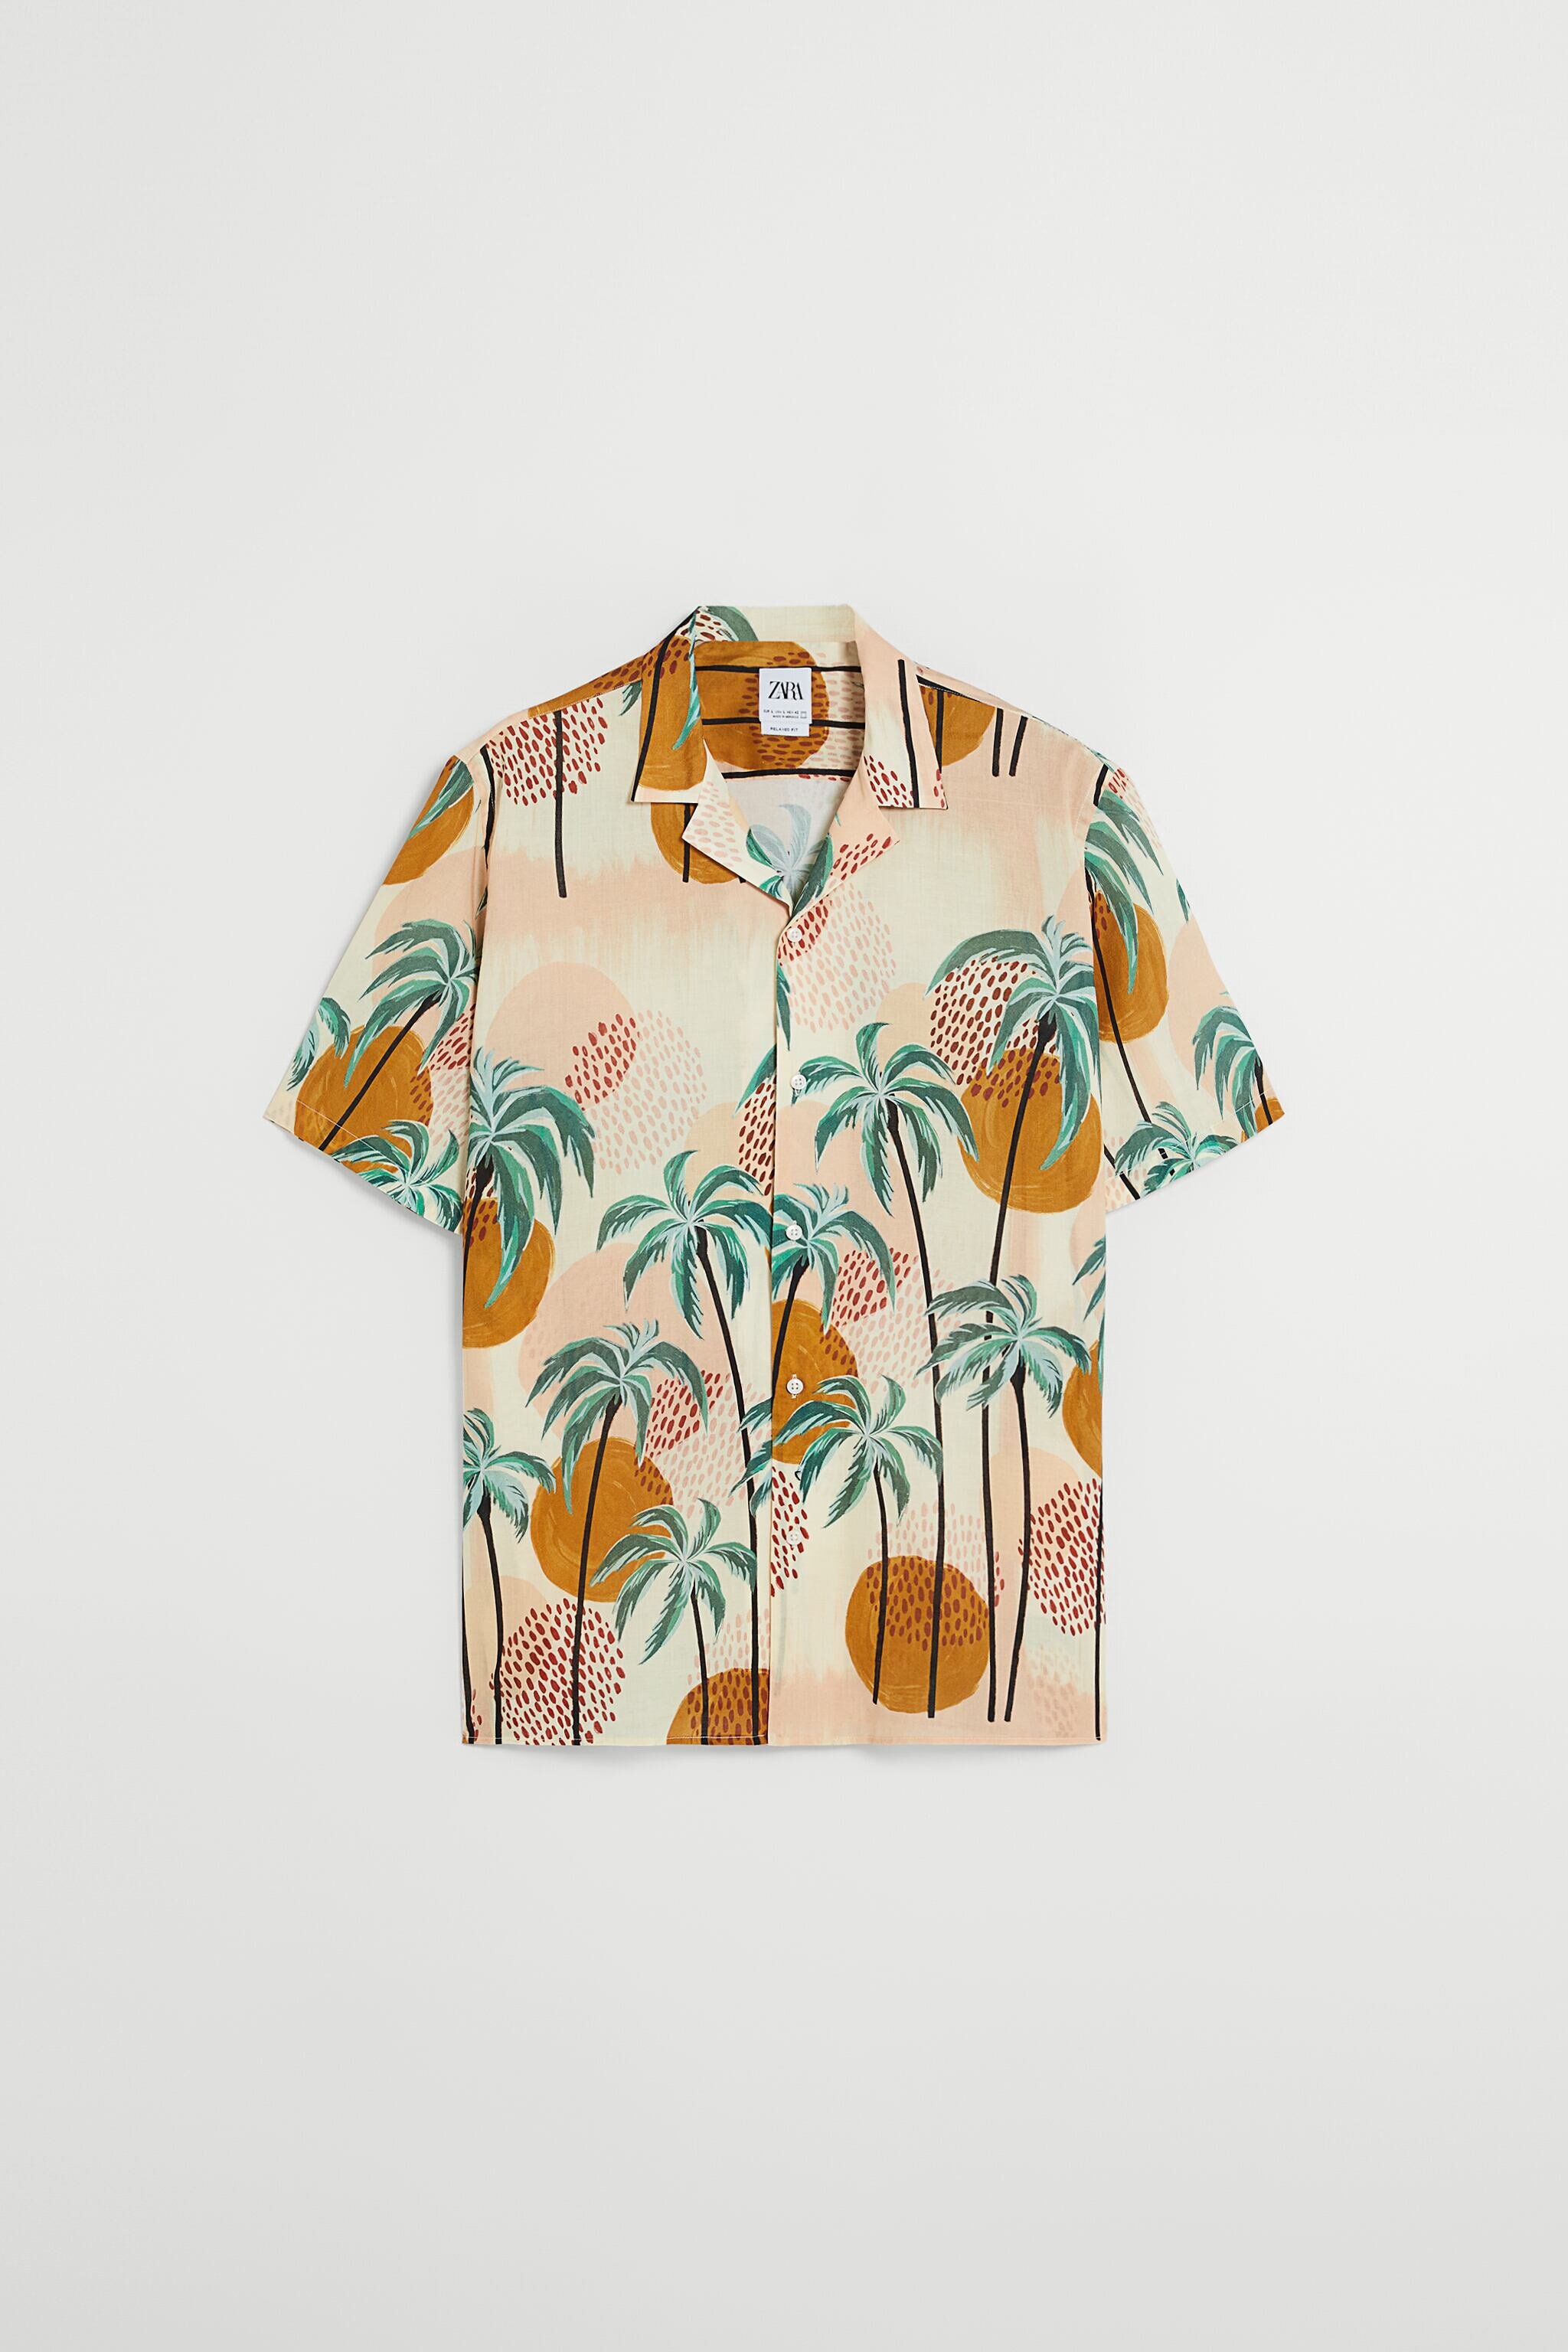 Palm Tree Print Shirt, ₱1,595